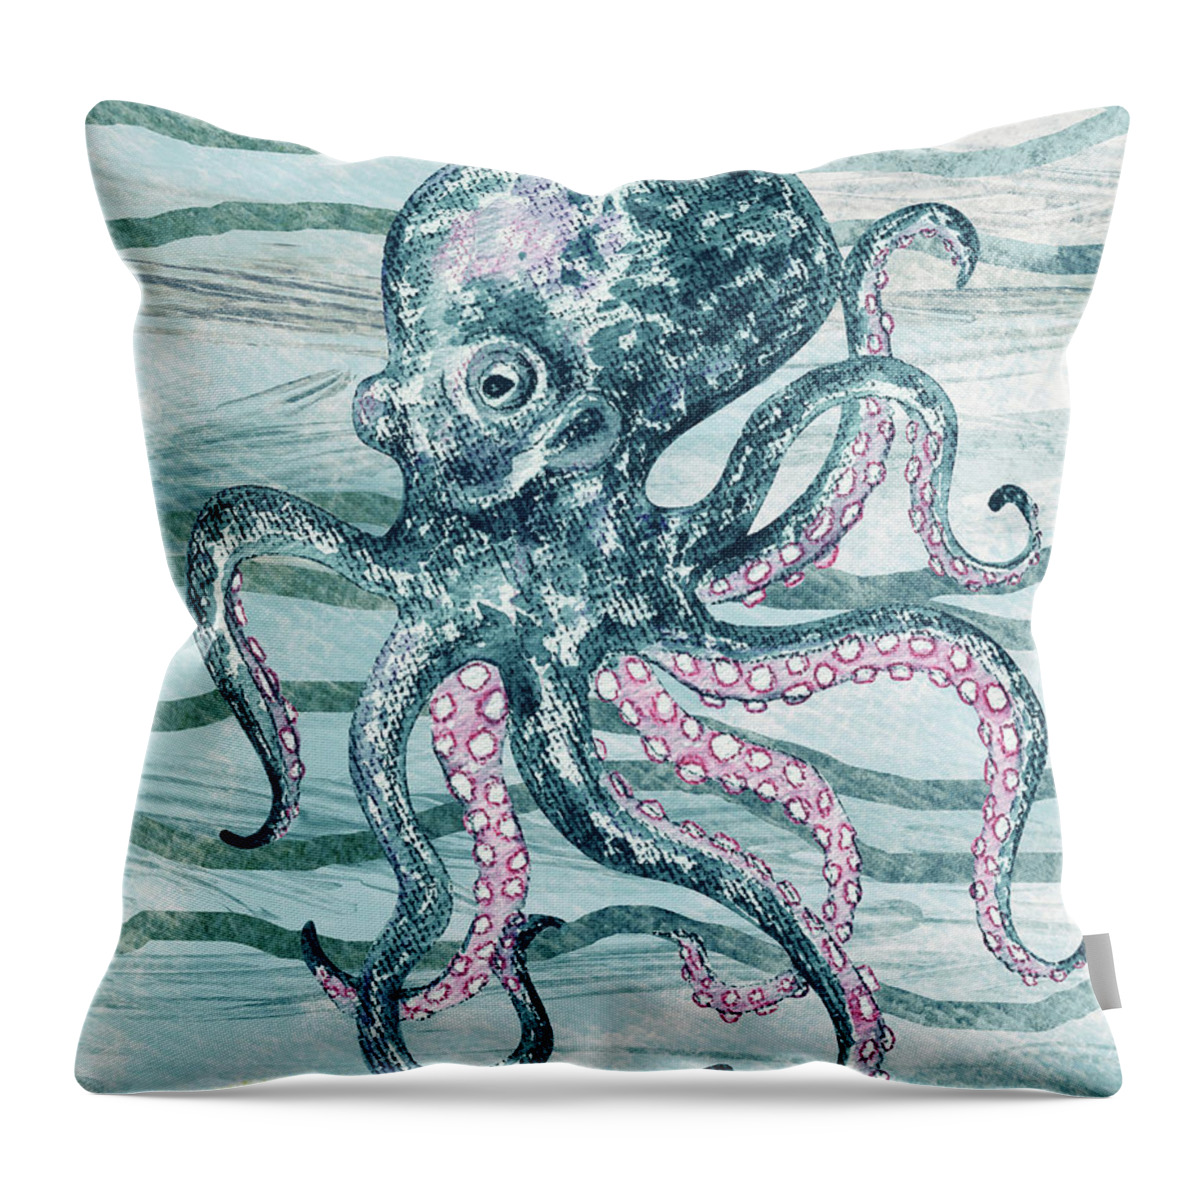 Octopus Throw Pillow featuring the painting Cute Teal Blue Watercolor Octopus On Calm Wave Beach Art by Irina Sztukowski